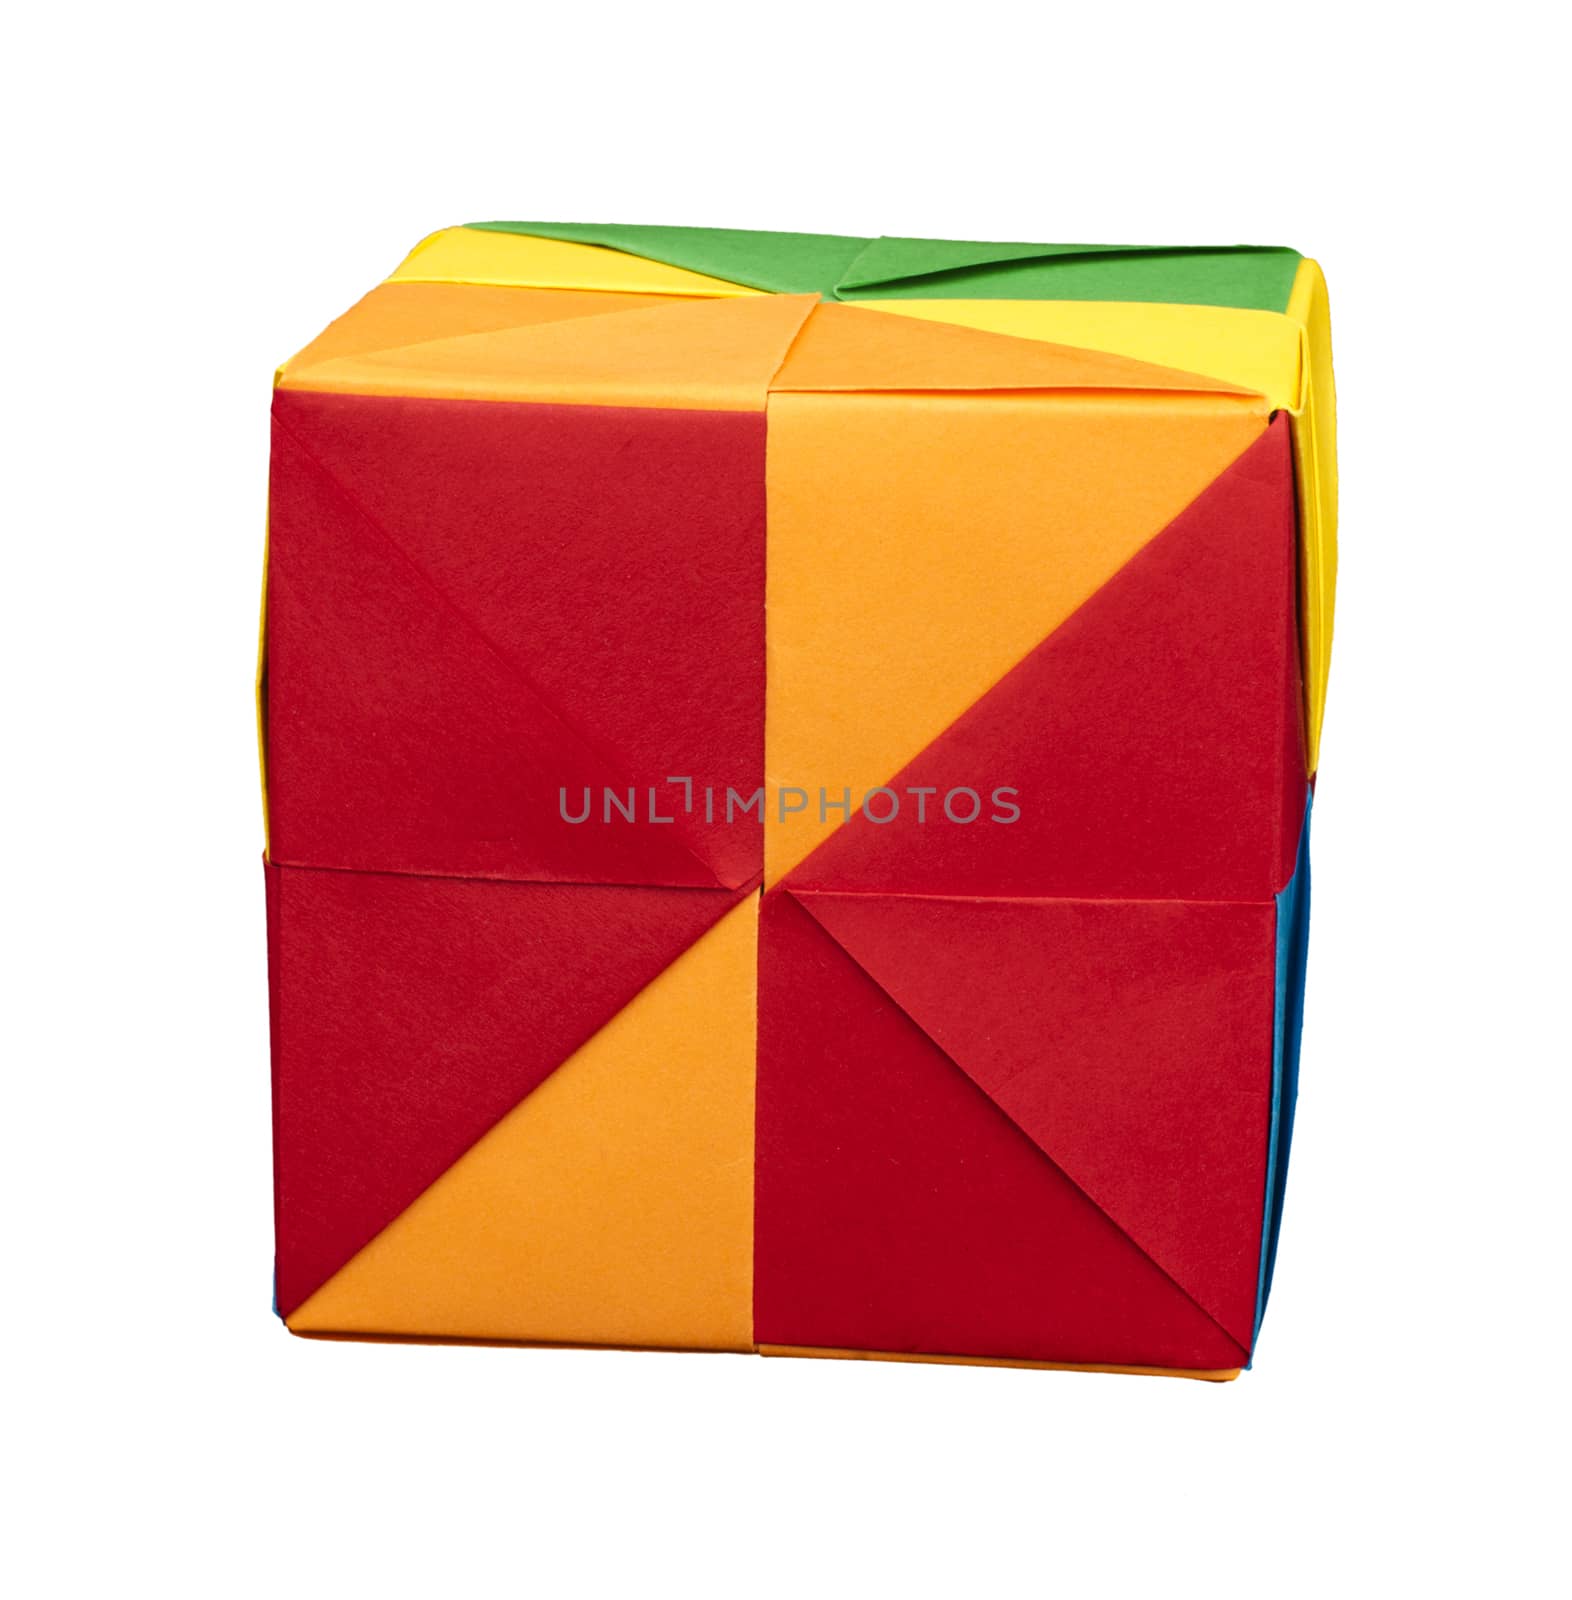 Paper cubes folded origami style. by deyan_georgiev